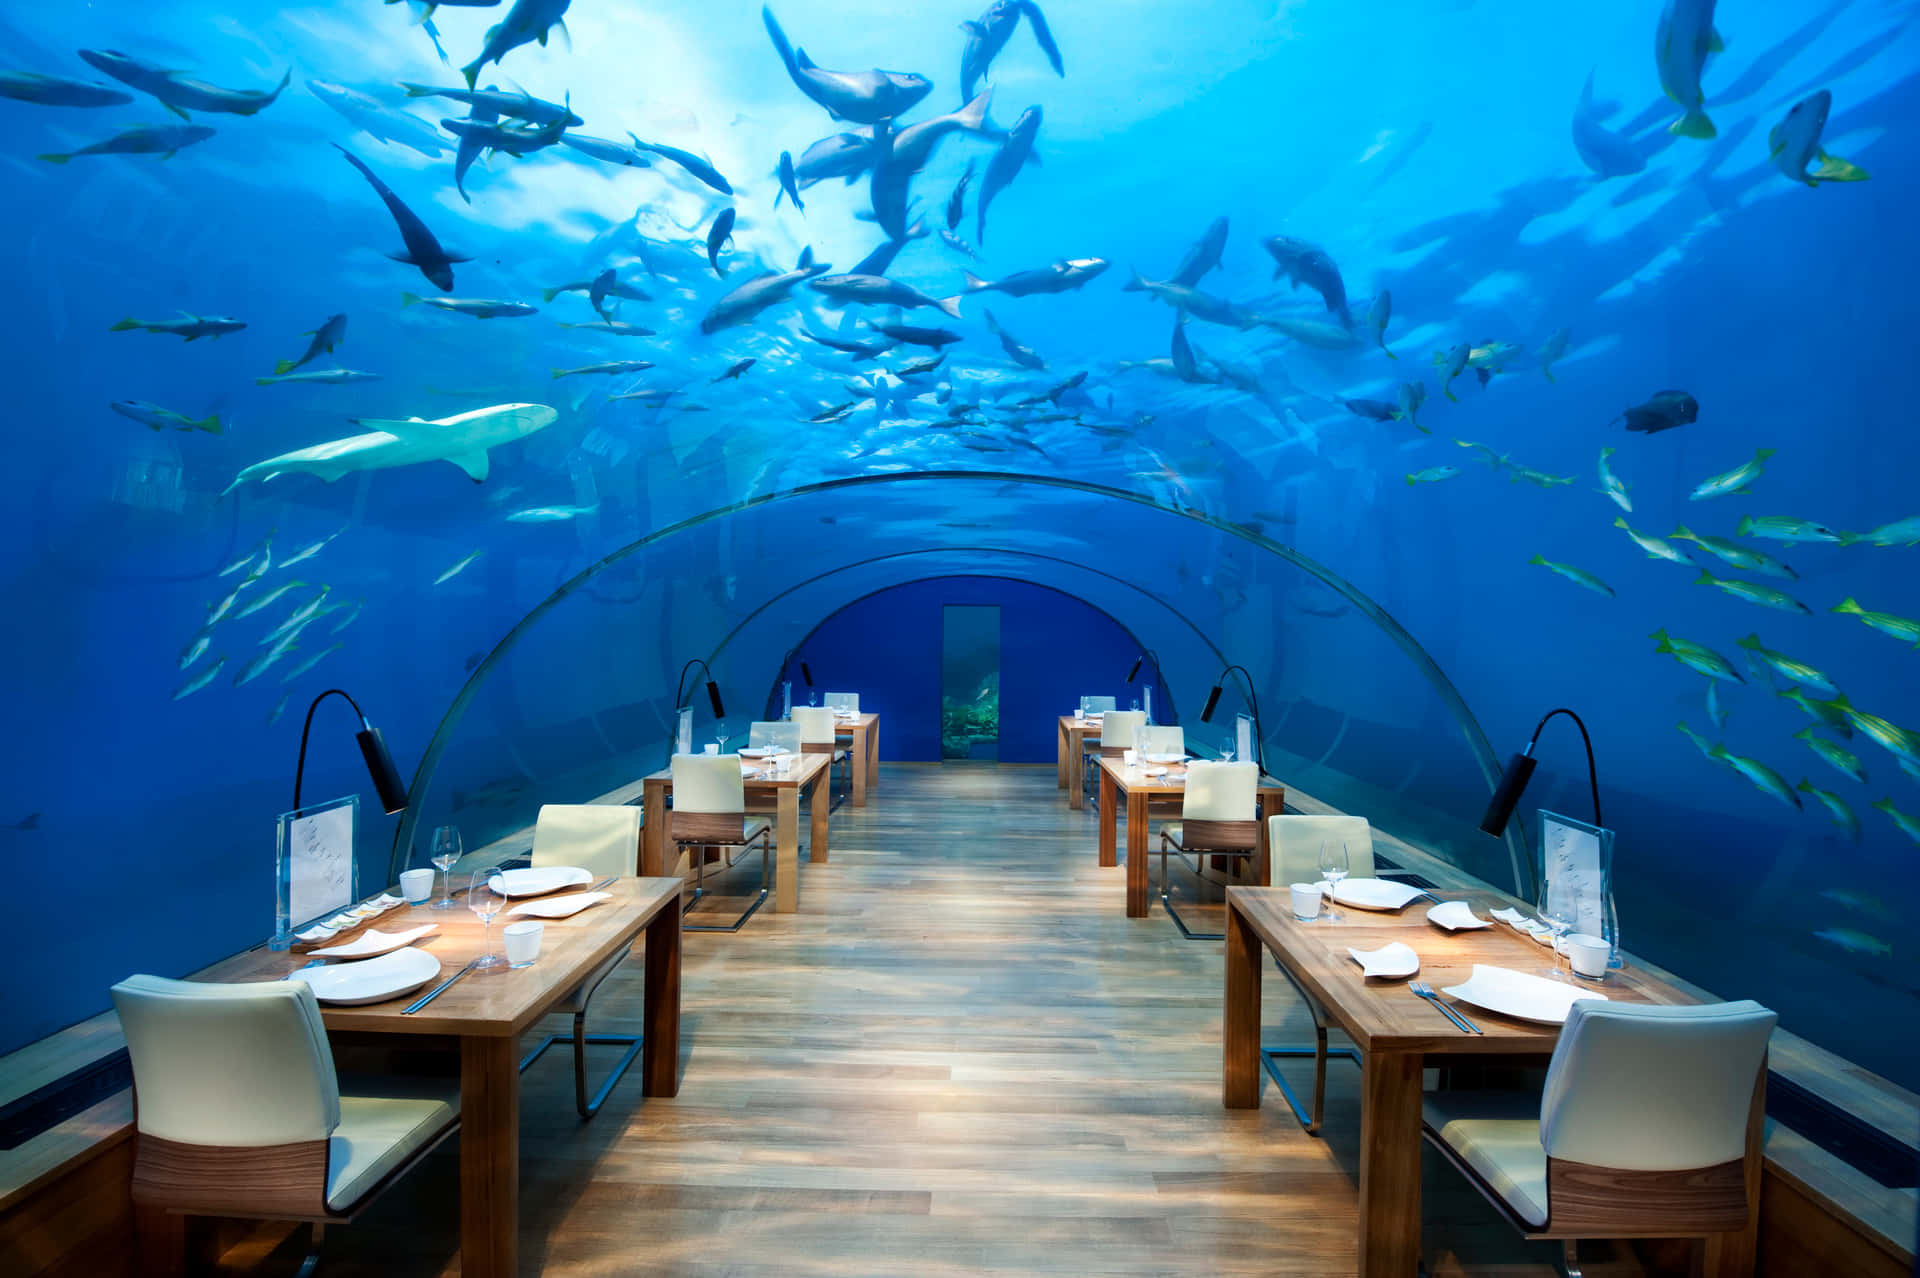 1.  Enjoy the Breathtaking View of an Aquarium